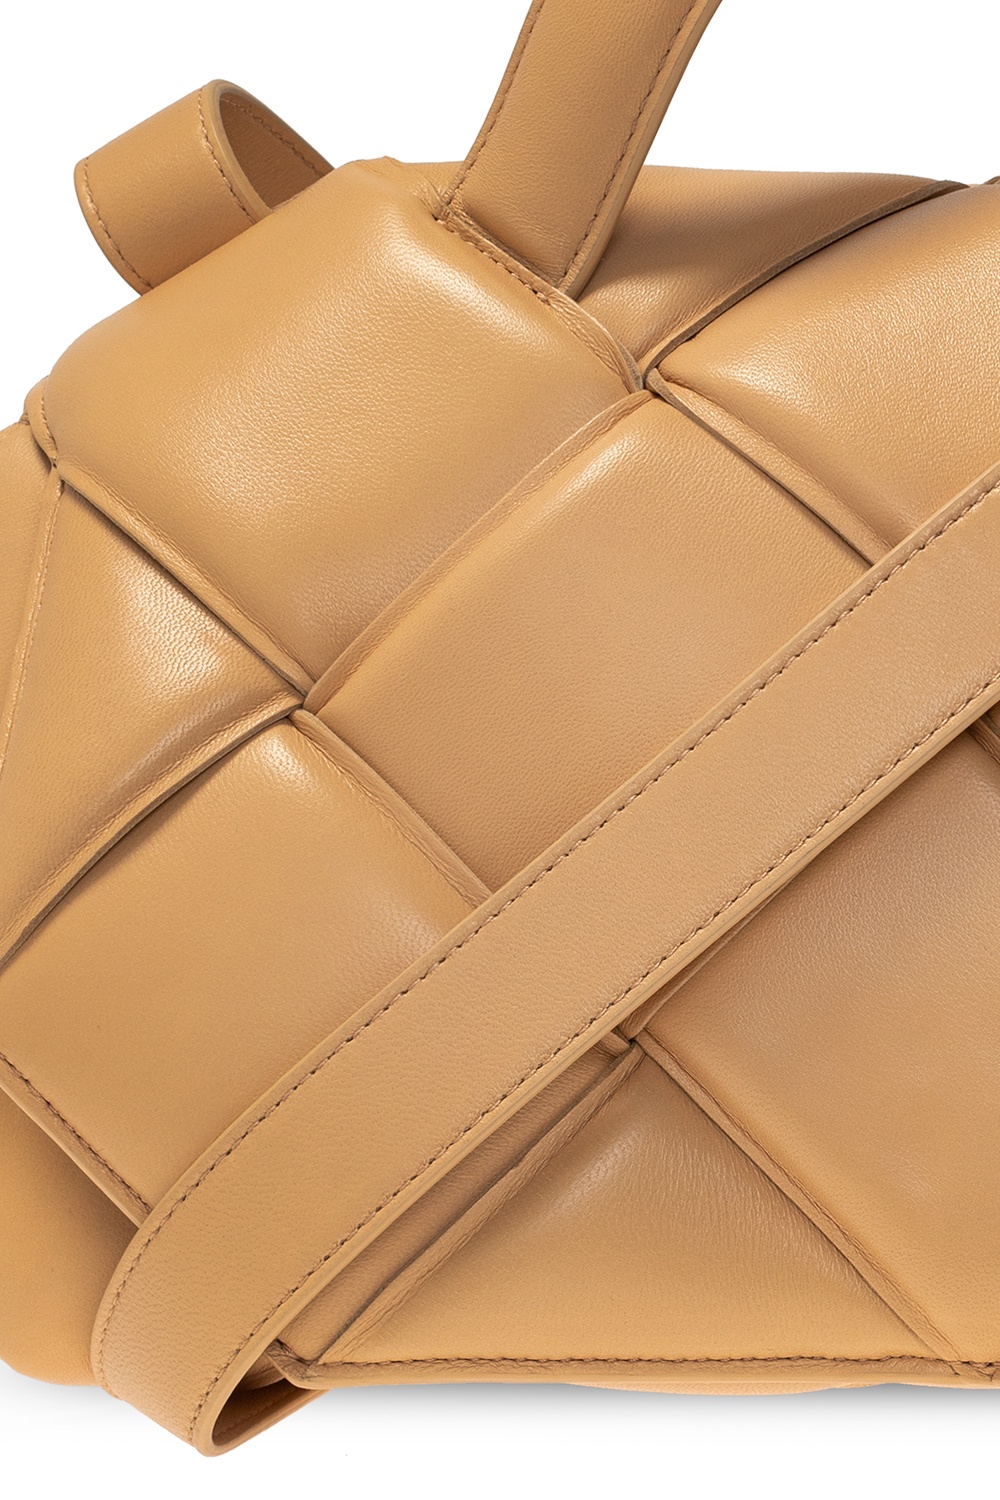 BOTTEGA-VENETA-Intrecciato-Leather-Shoulder-Bag-Brown-239988 – dct